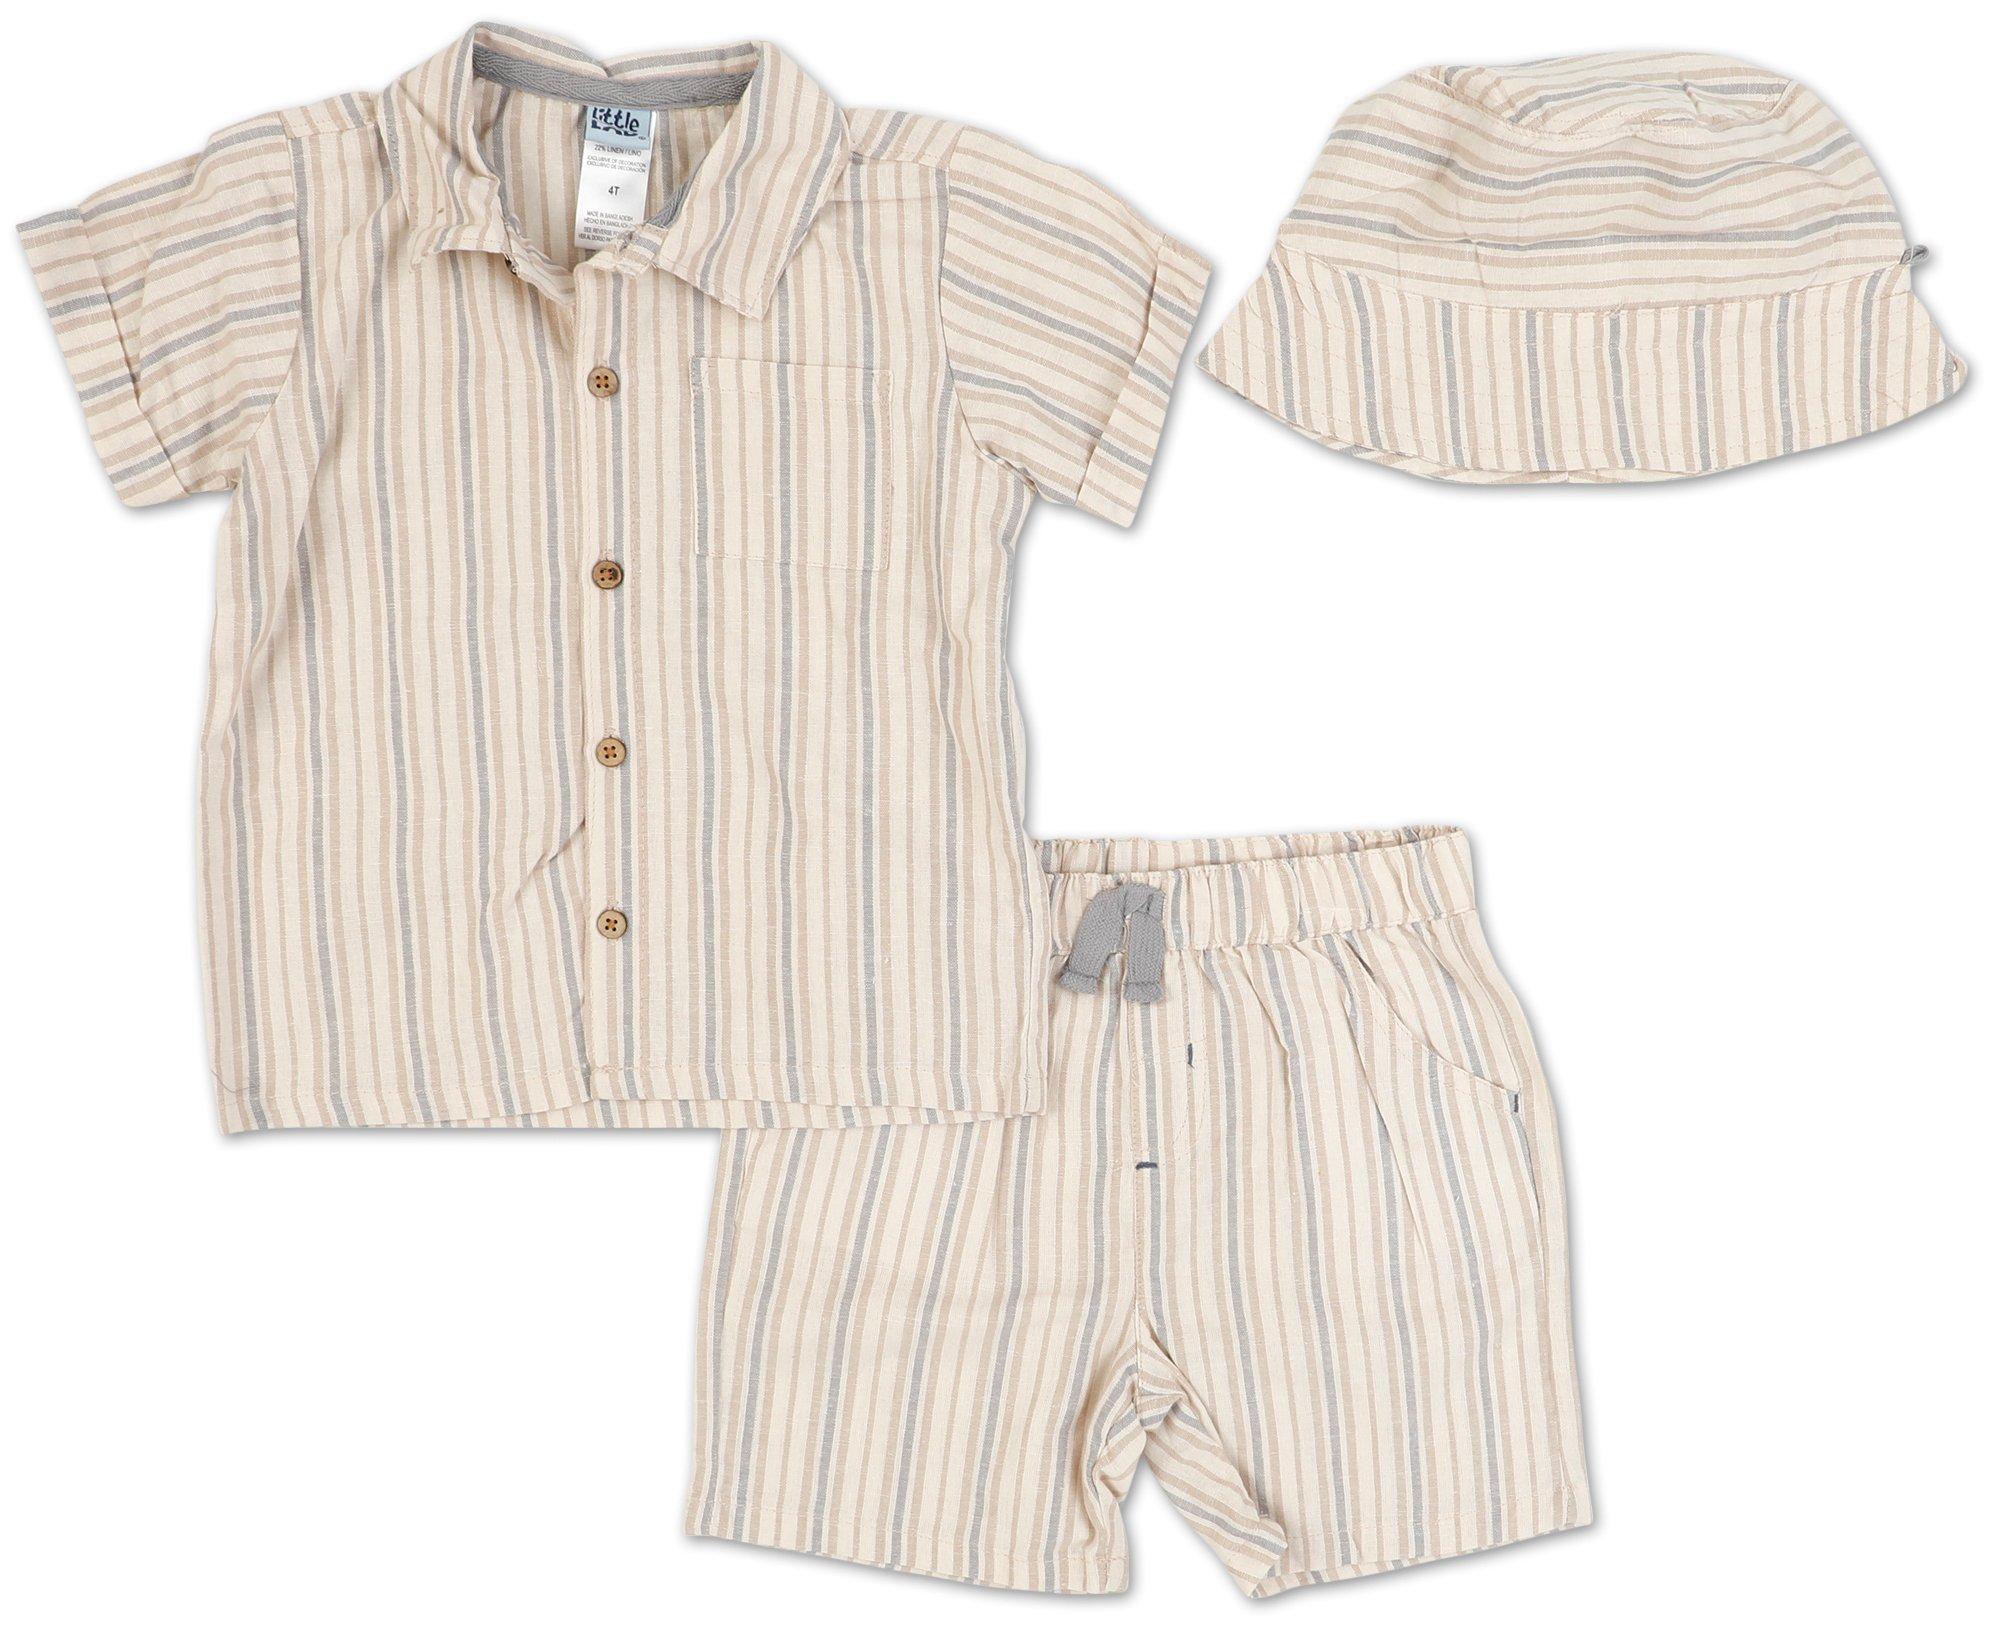 Toddler Boys 3 Pc Striped Shorts Set